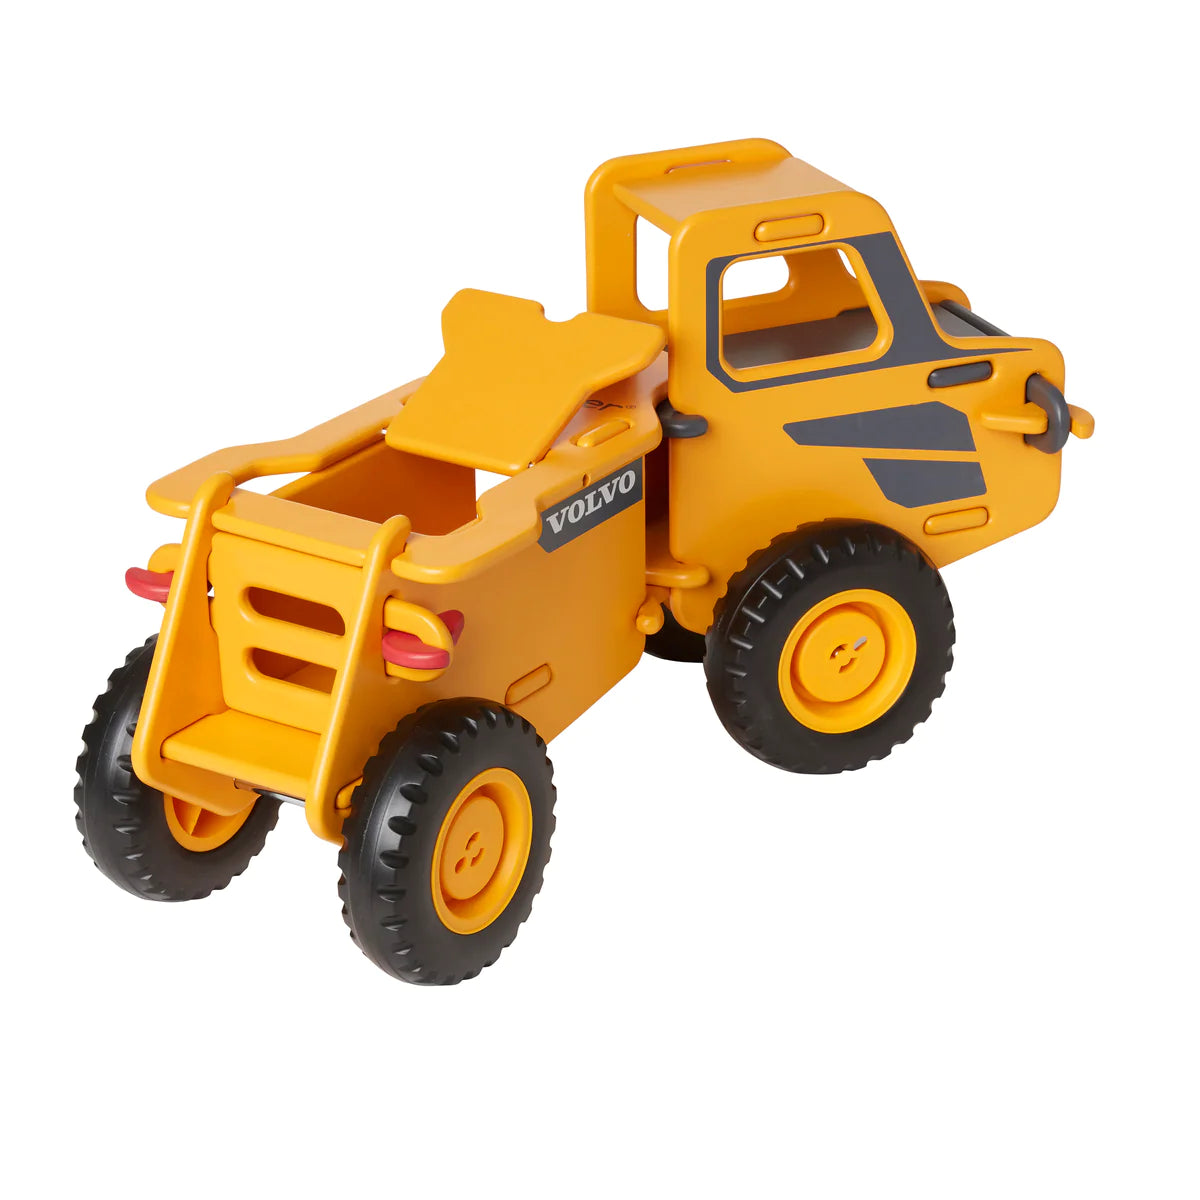 Moover Toys Classic Dump Truck